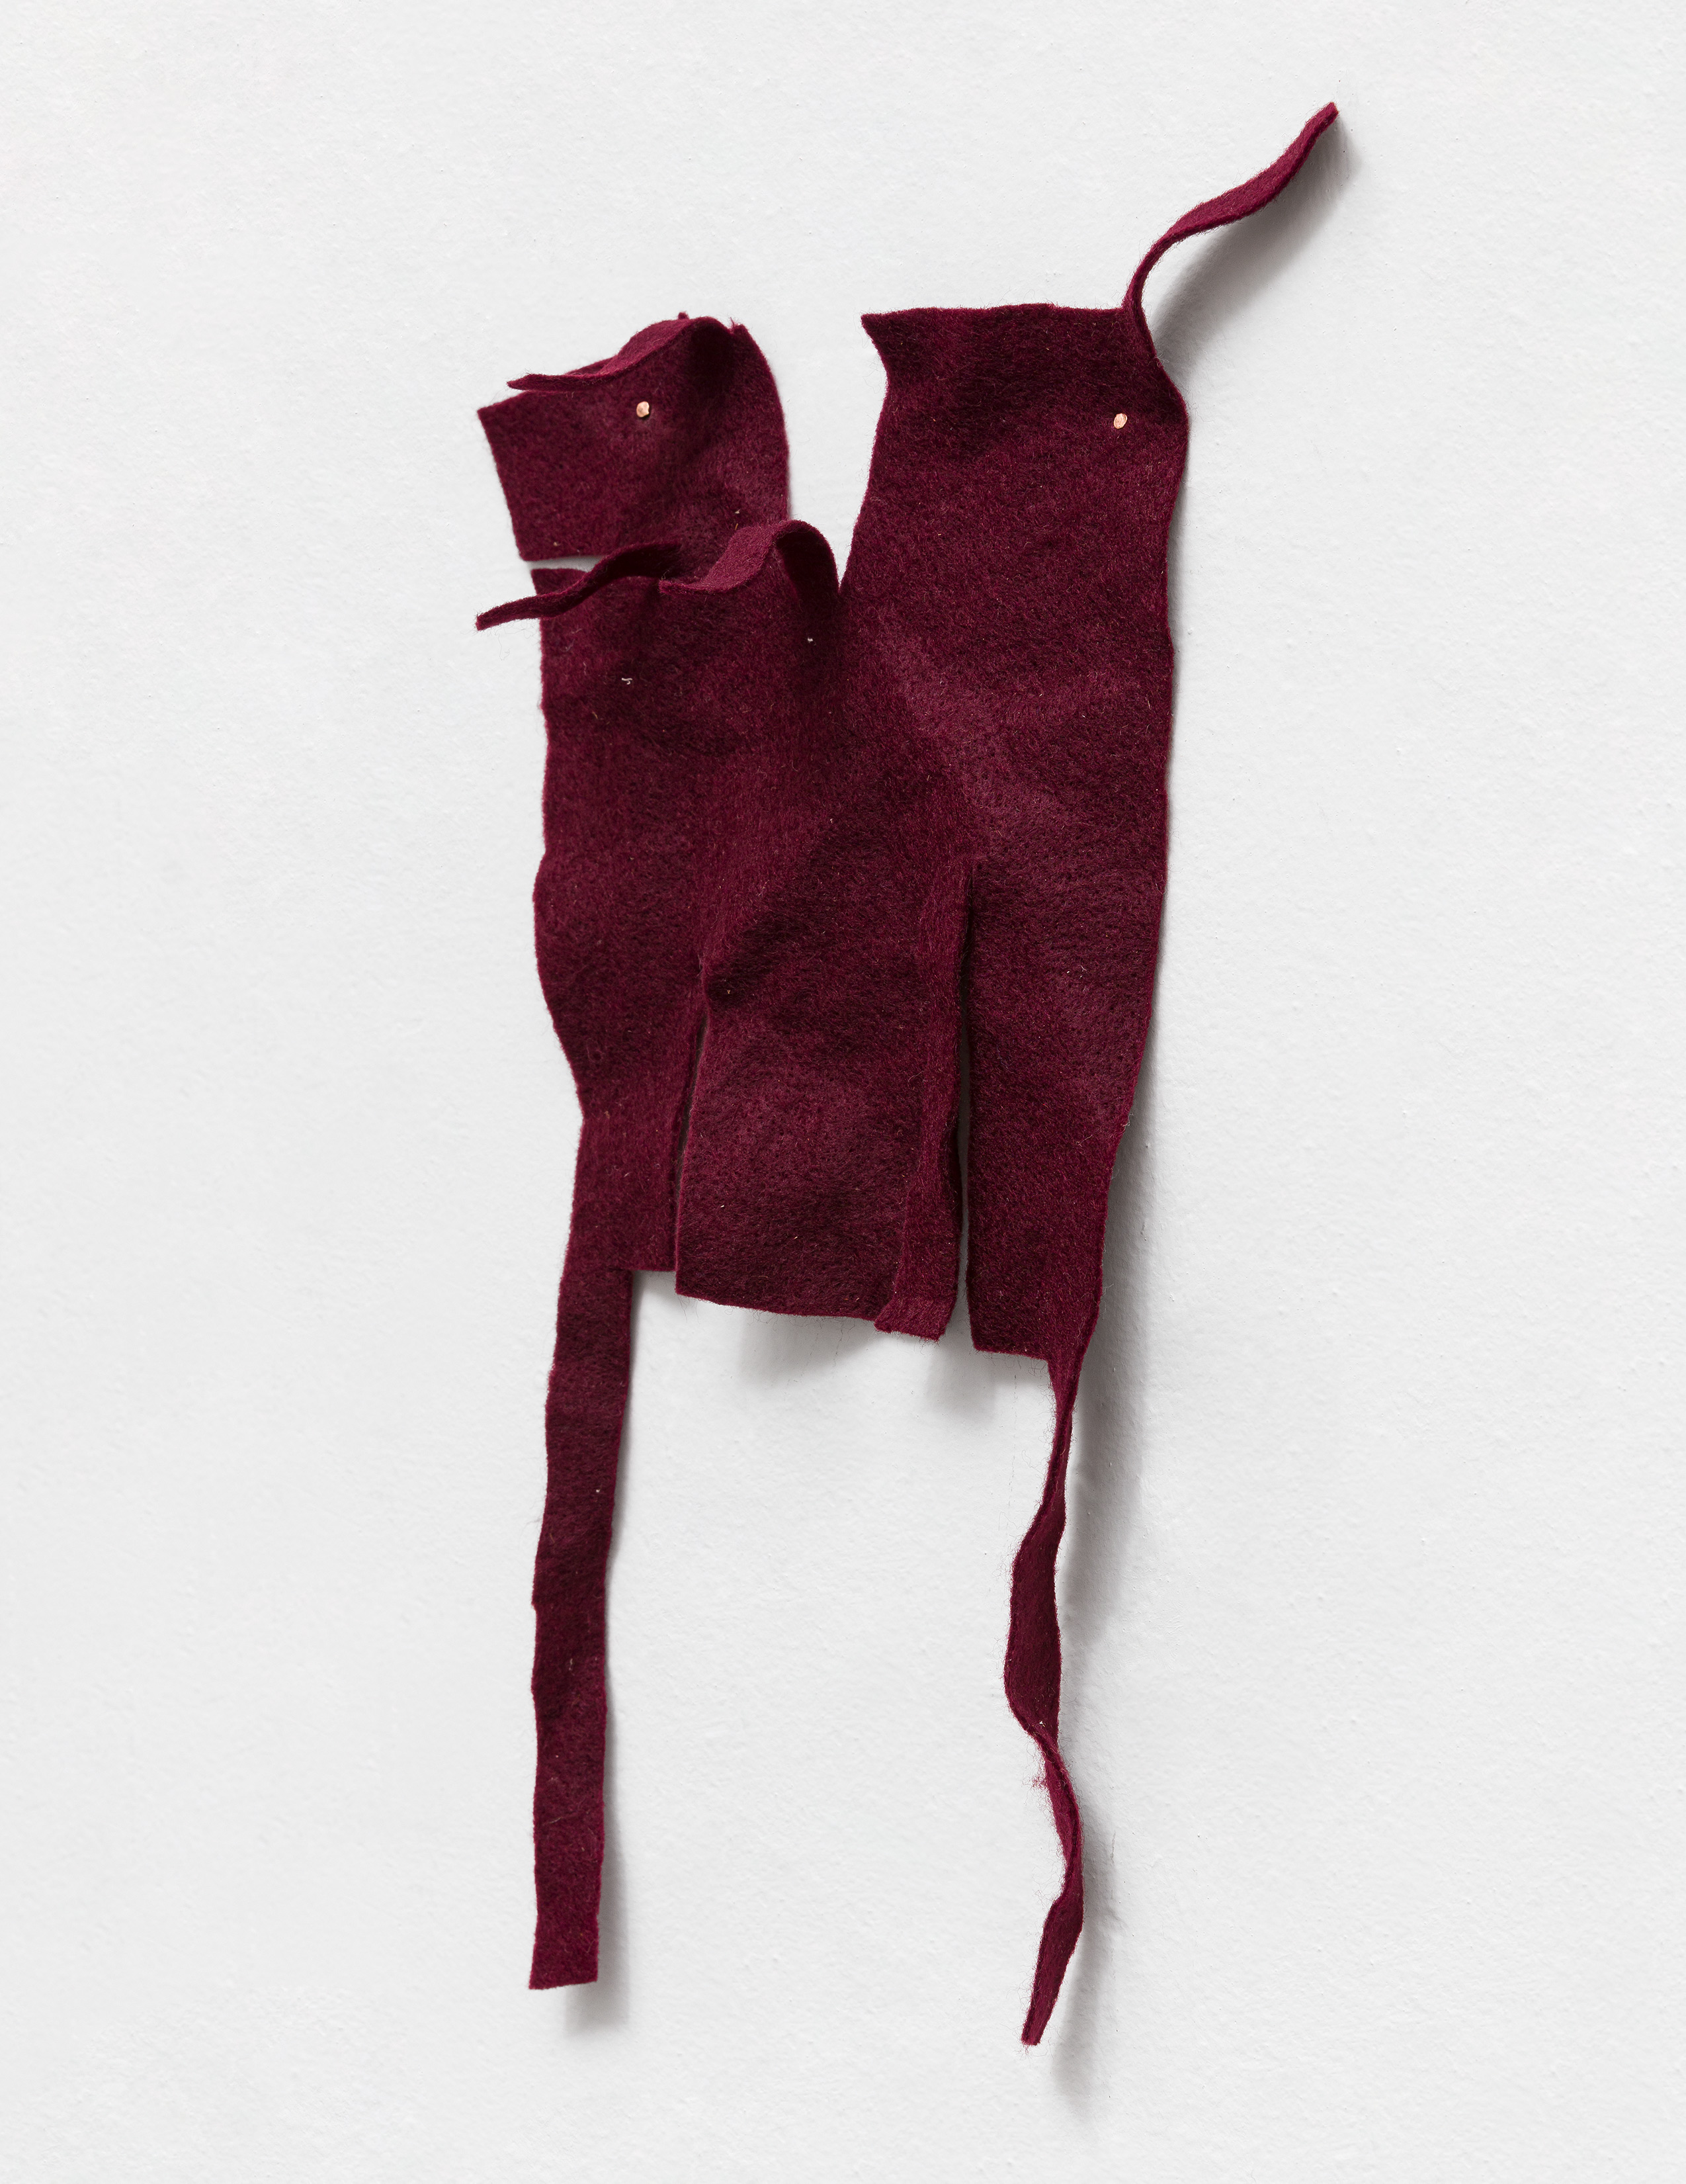 Angled shot of Paulo Monteiro's Untitled felt piece